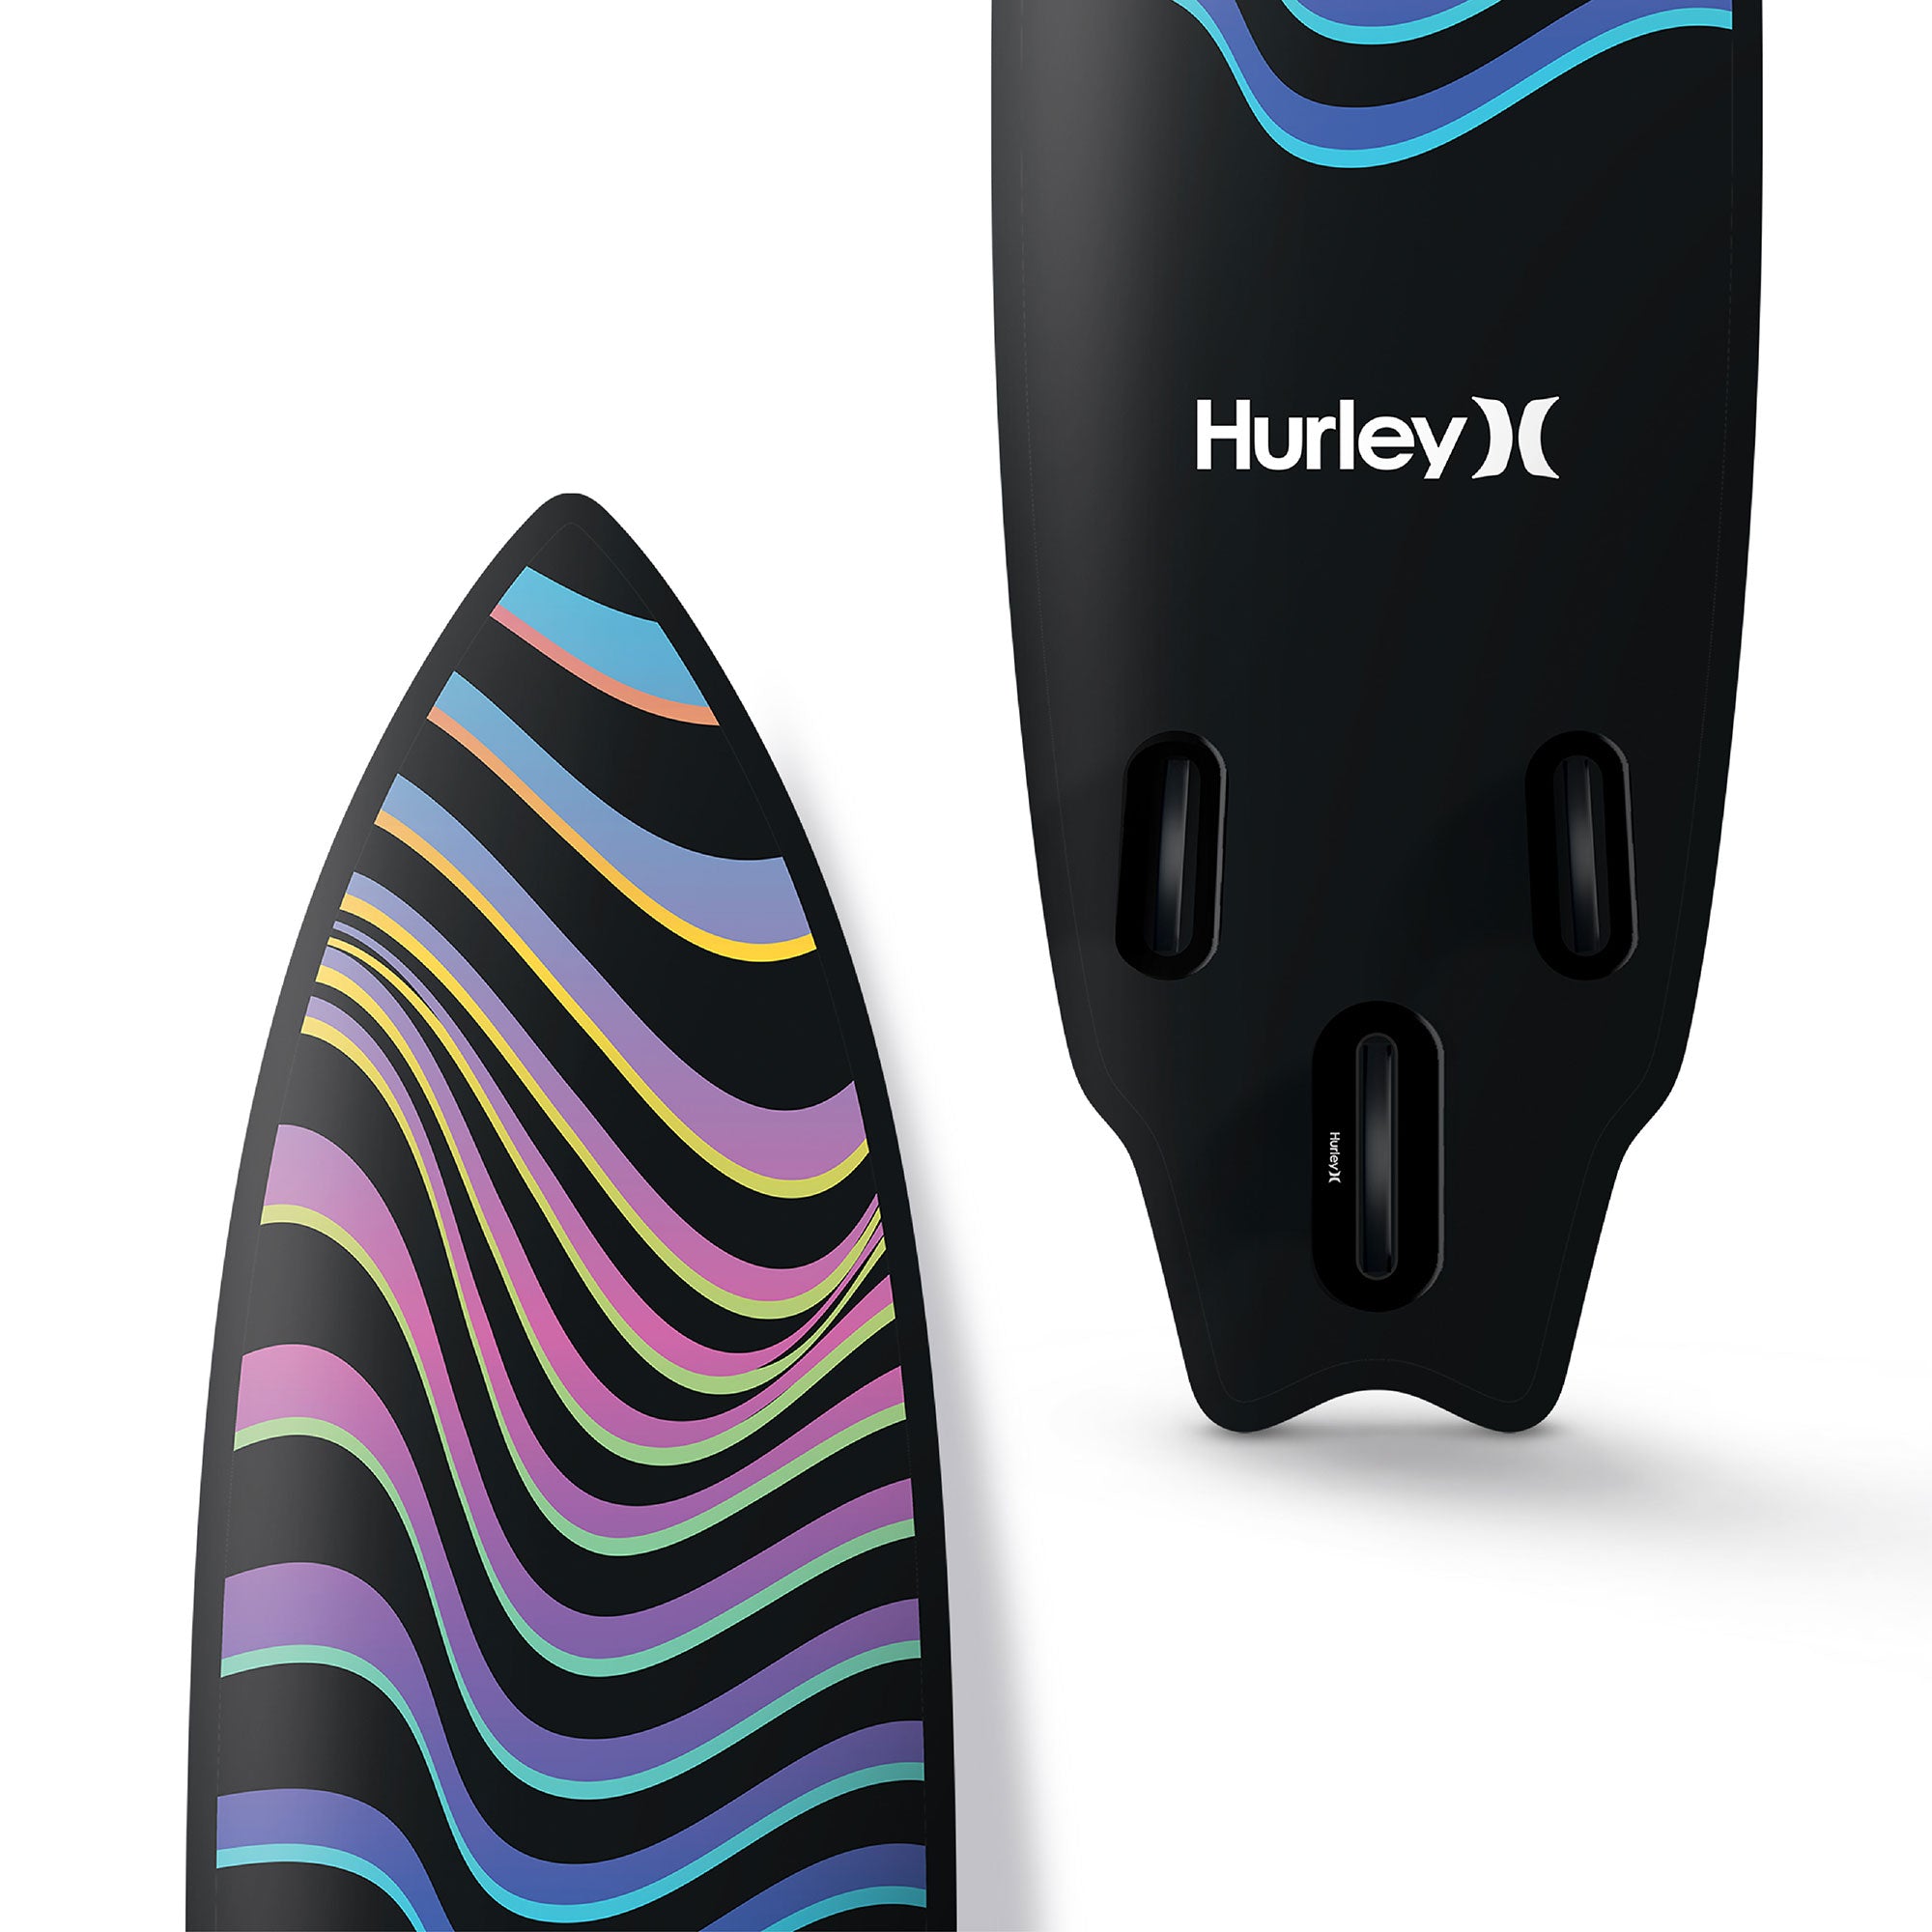 Hurley PhantomSurf Ombré 9’ iSUP Set at HeySurf.com